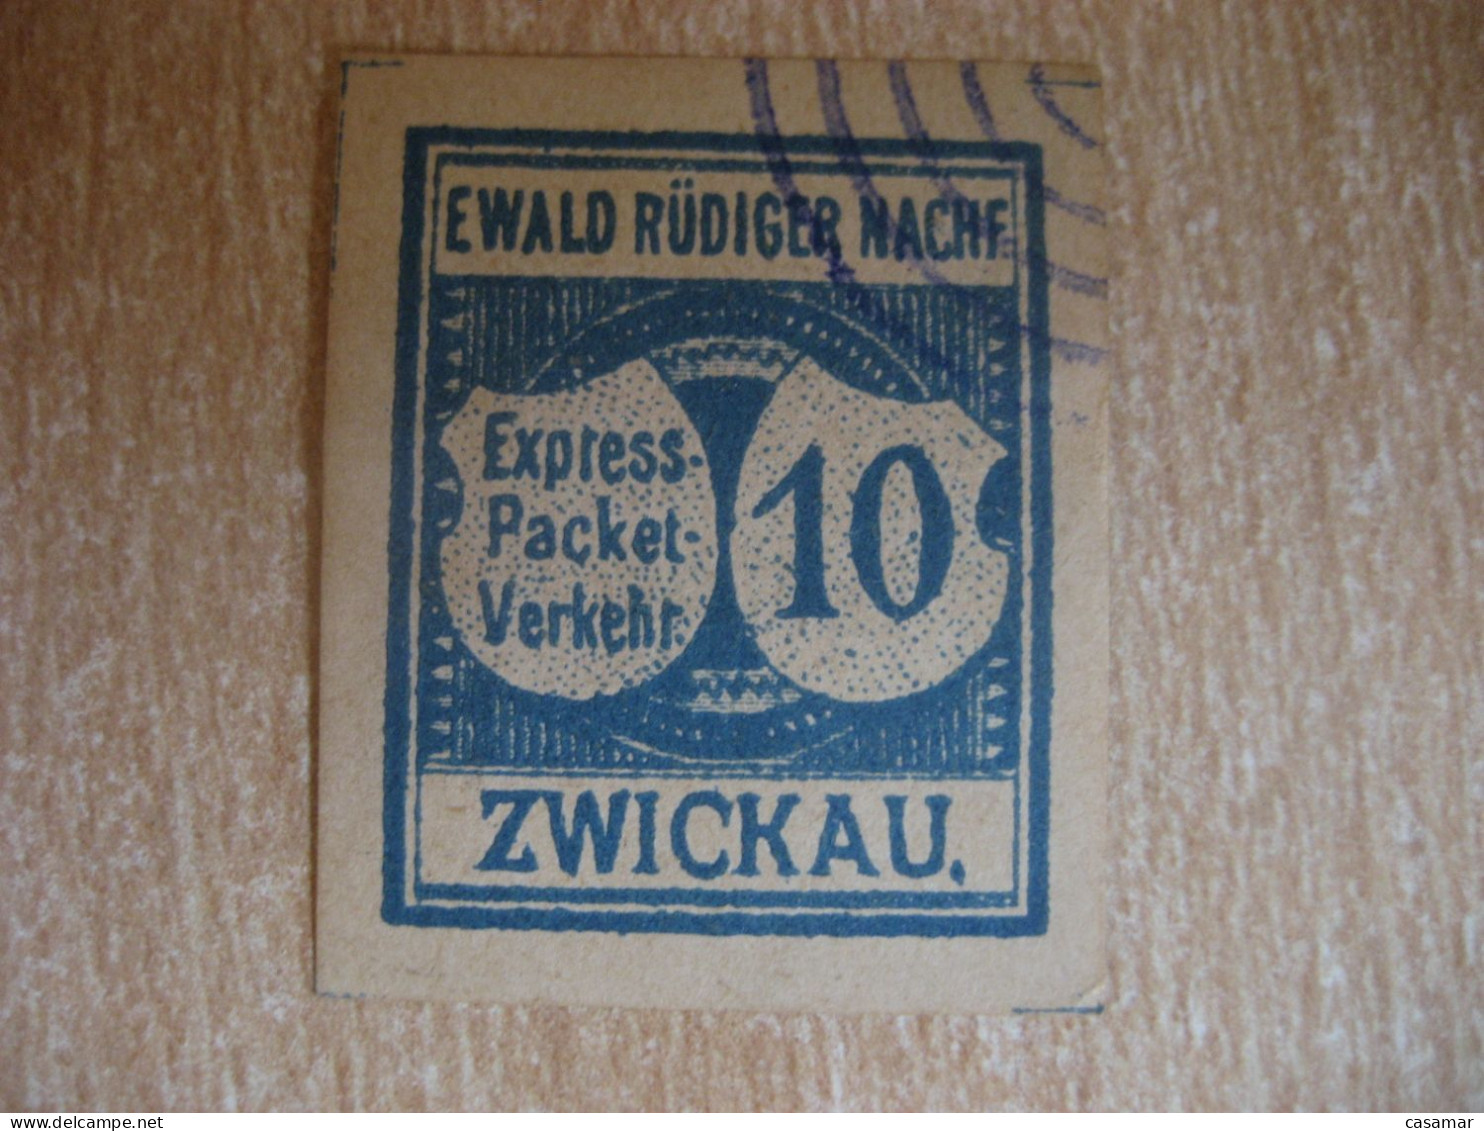 ZWICKAU 1889 Ewald Rudiger Nachf 10 Pf Michel A2 Express-Packet-Verkehr Privat Private Local Stamp GERMANY - Private & Lokale Post